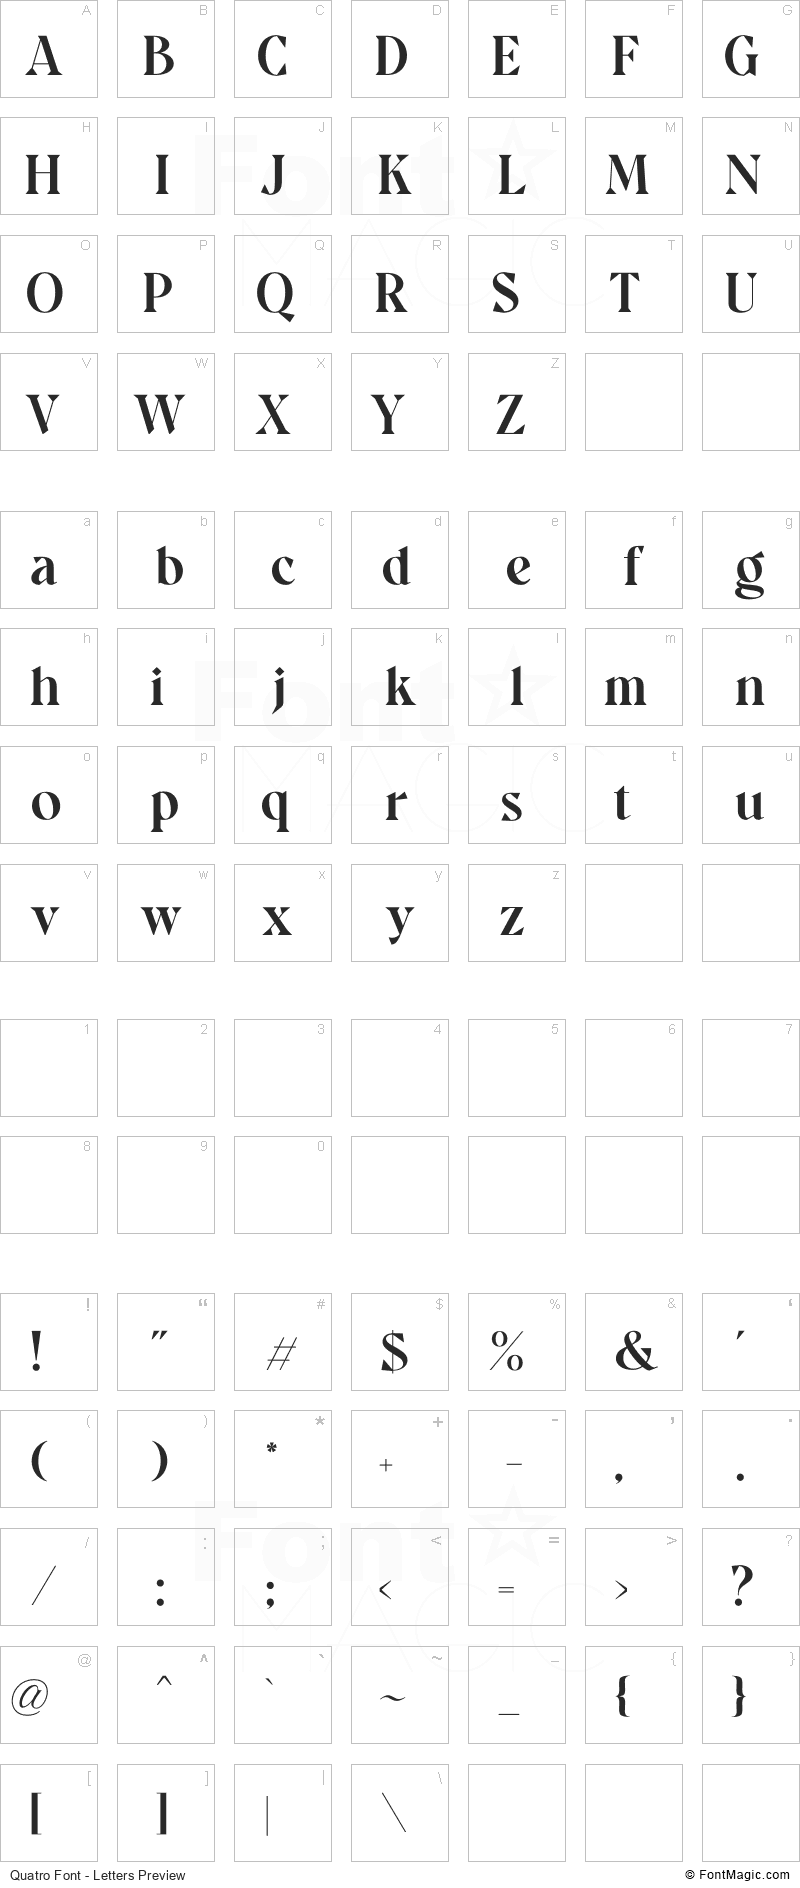 Quatro Font - All Latters Preview Chart